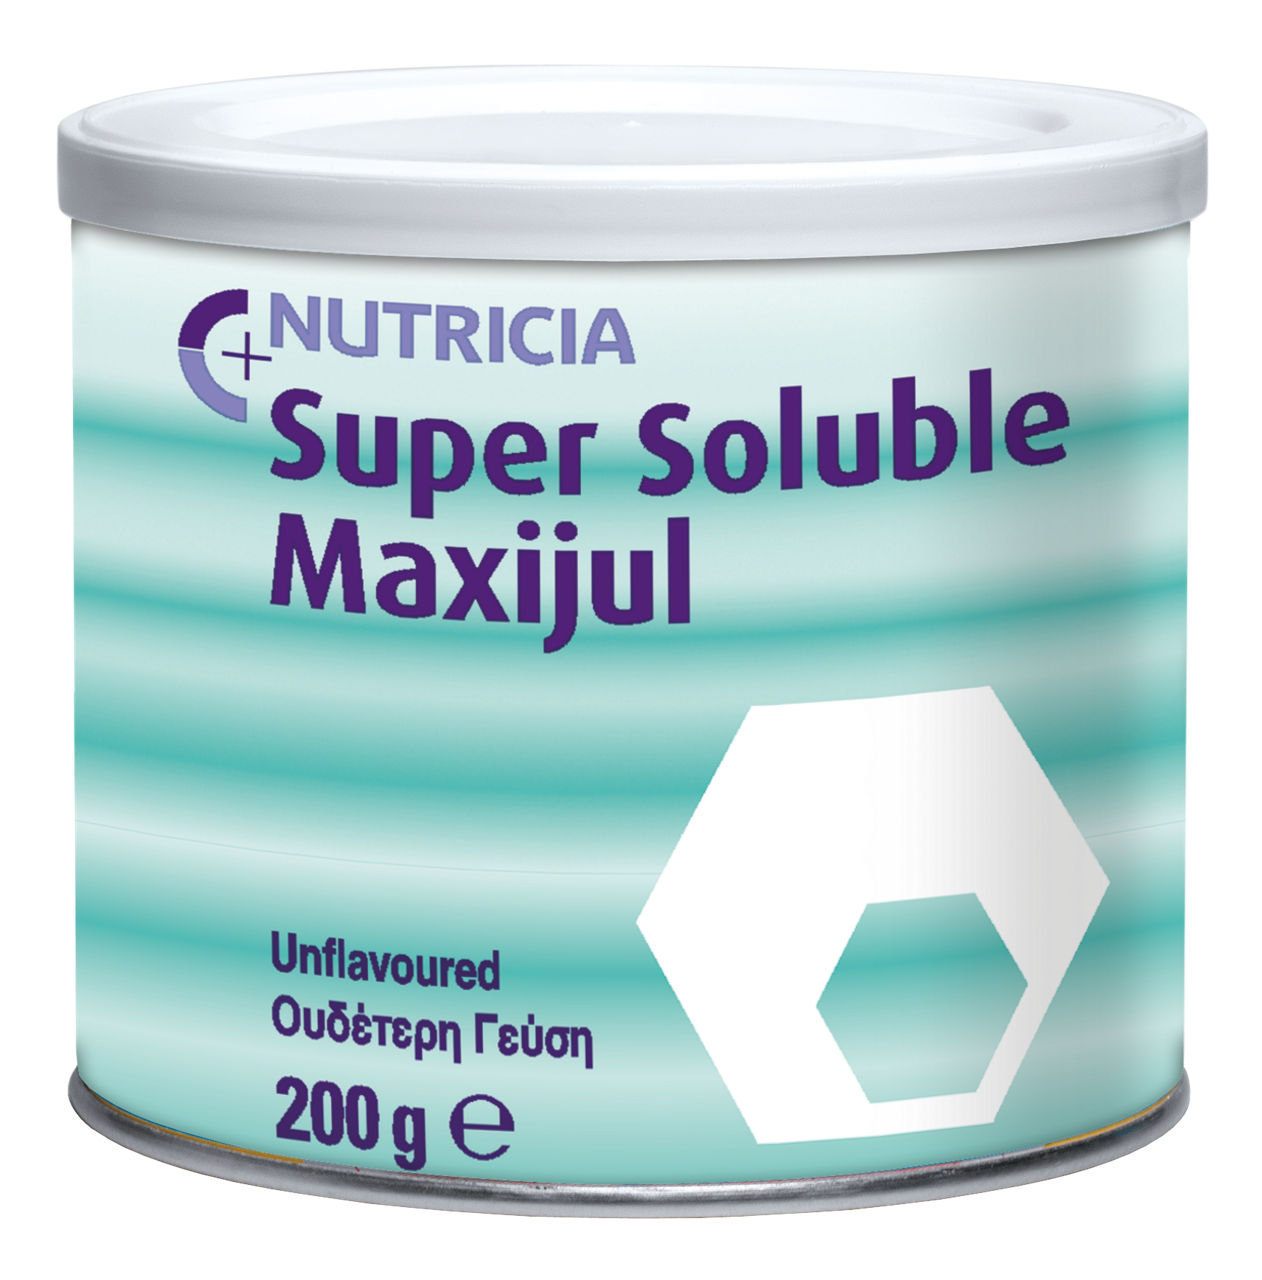 en-GB,Super Soluble Maxijul